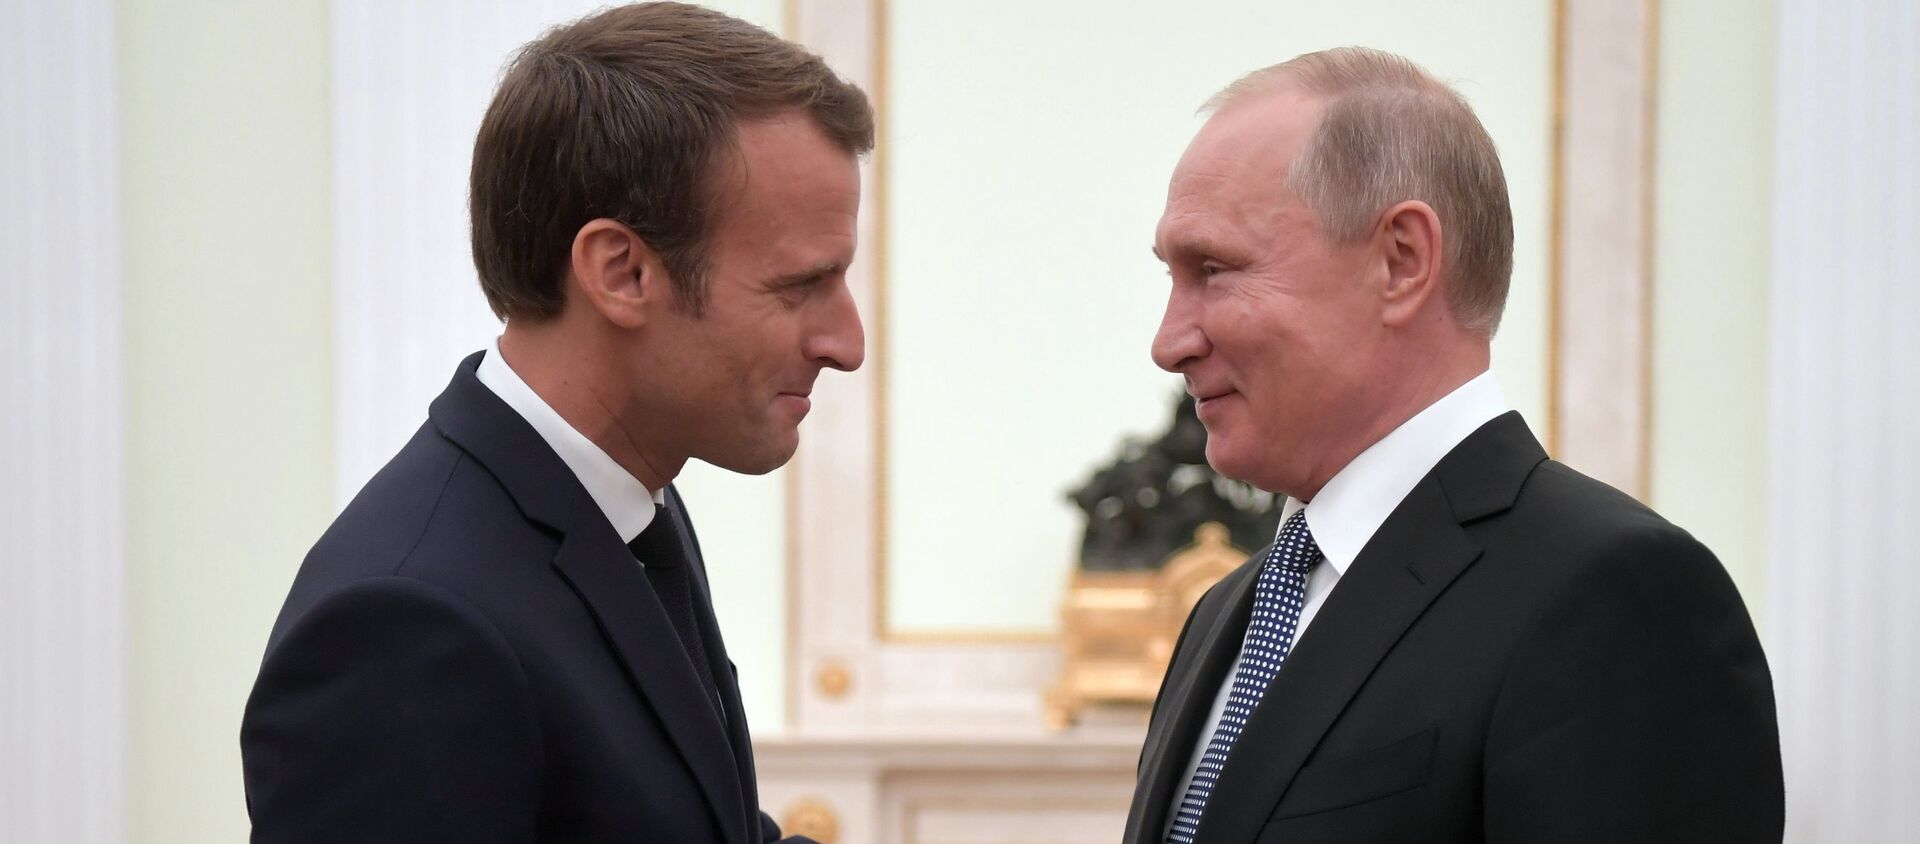 Президент РФ В. Путин встретился с президентом Франции Э. Макроном  - Sputnik Молдова, 1920, 17.04.2020